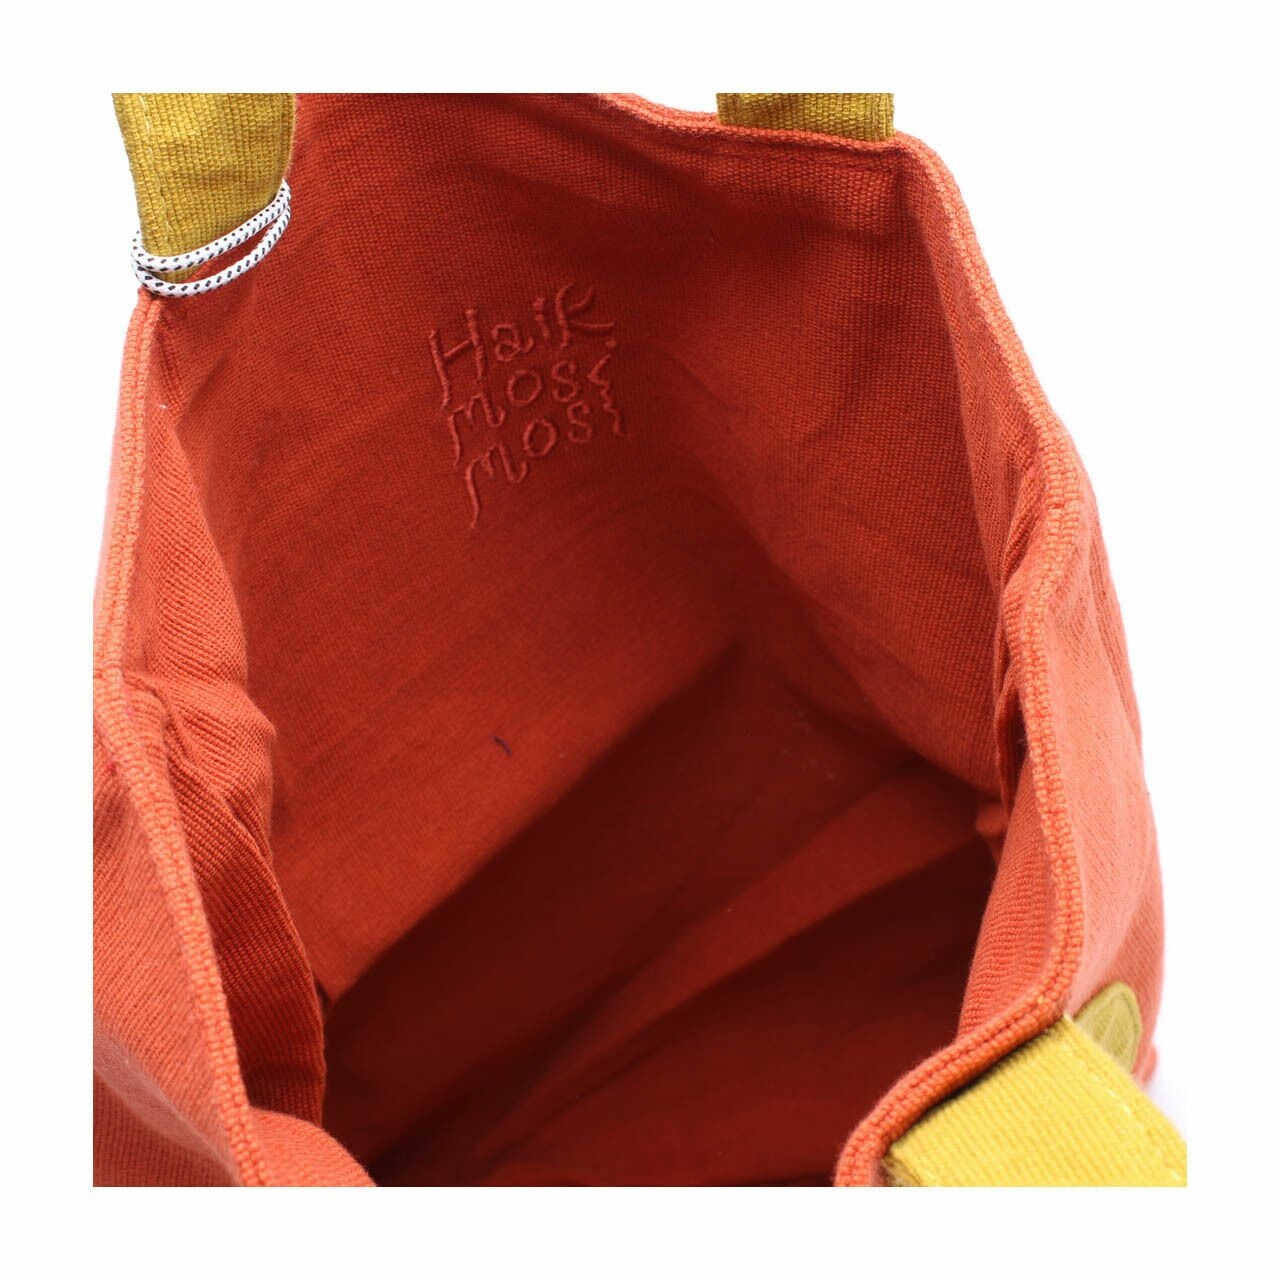 Haik Mosi Mosi Orange Yokogao Tote Bag